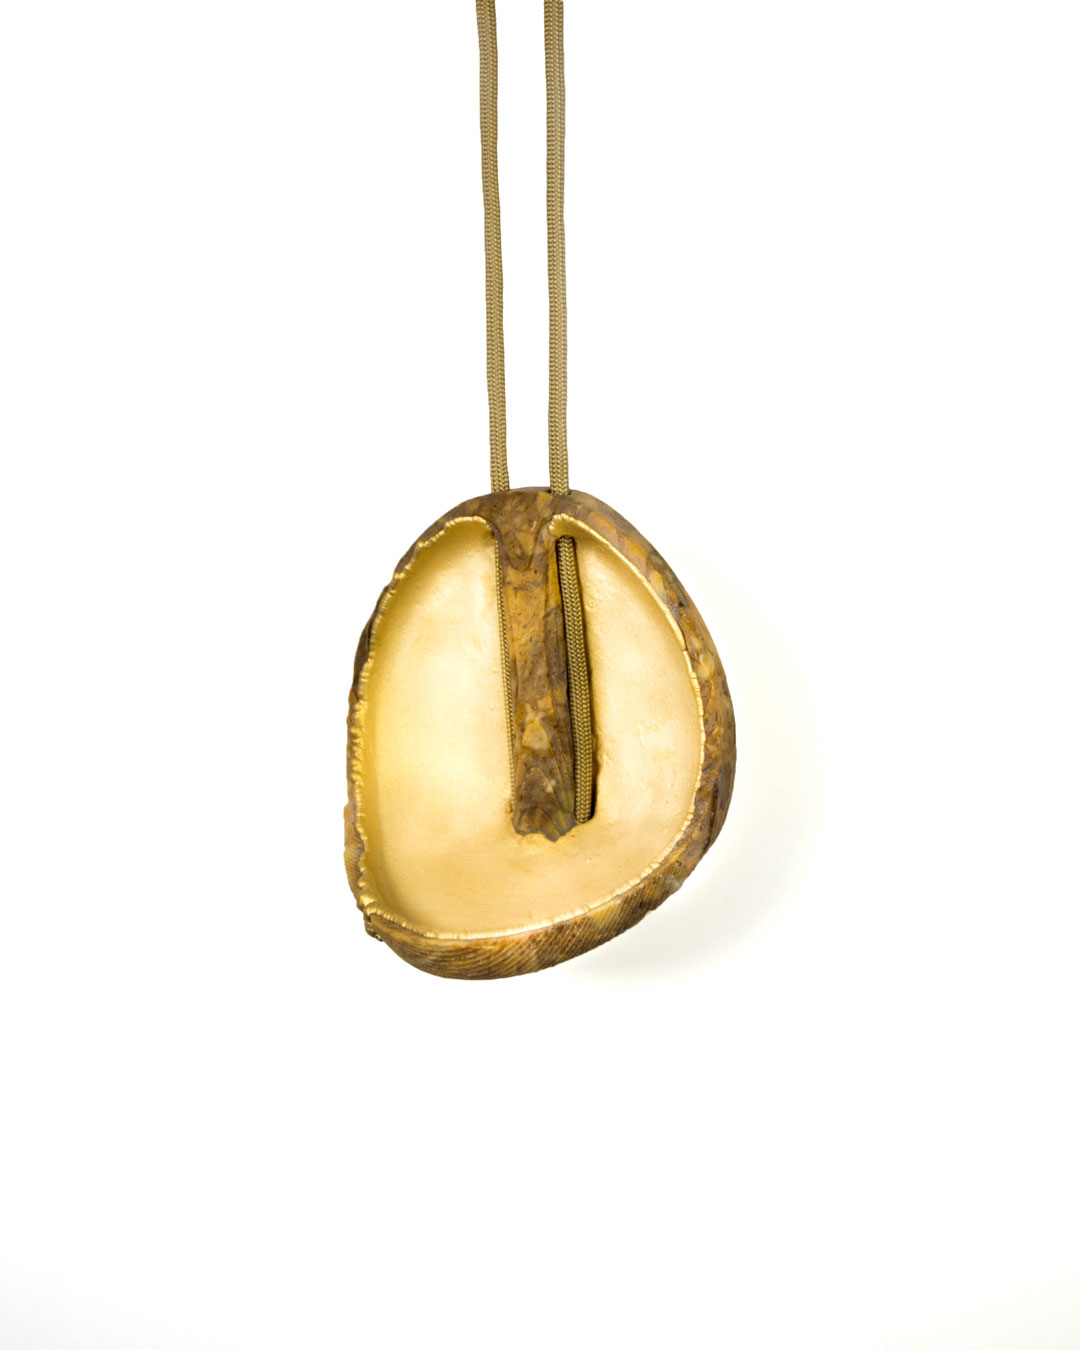 Edu Tarín, zonder titel, 2016, hanger; gele jaspis, koper, goud, 100 x 95 x 65 mm, €5450